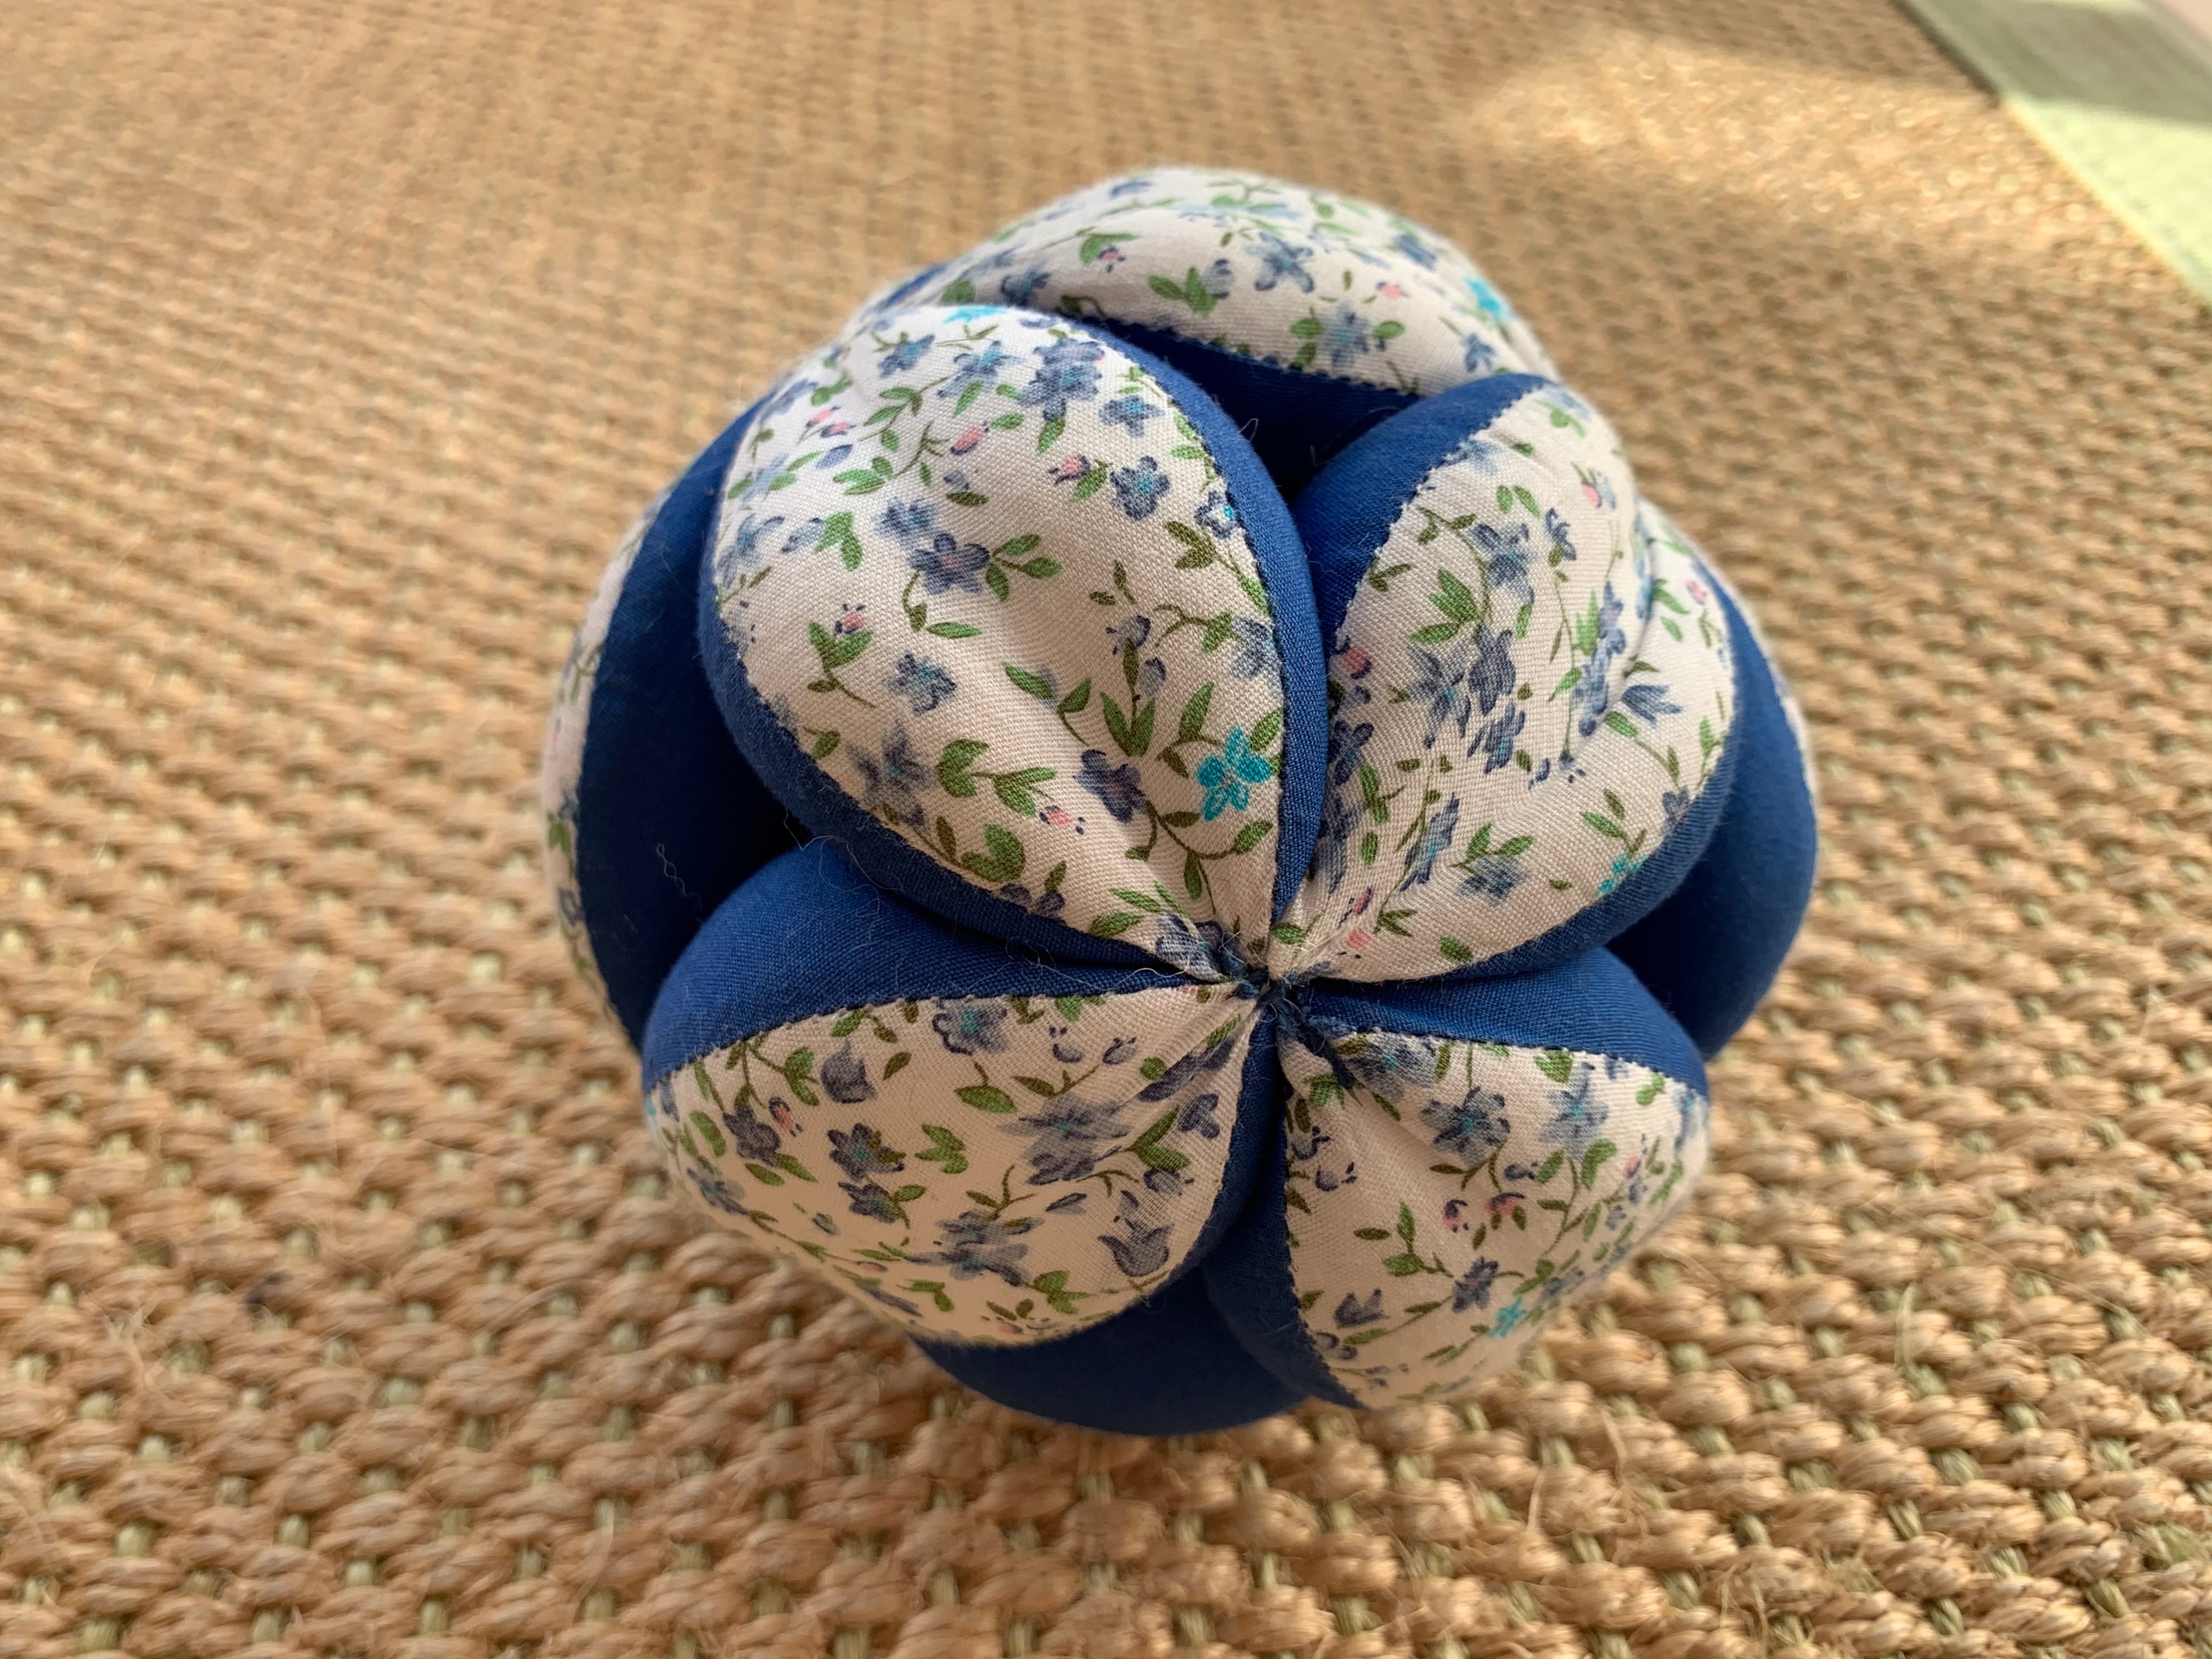 Handmade gripping ball for babies